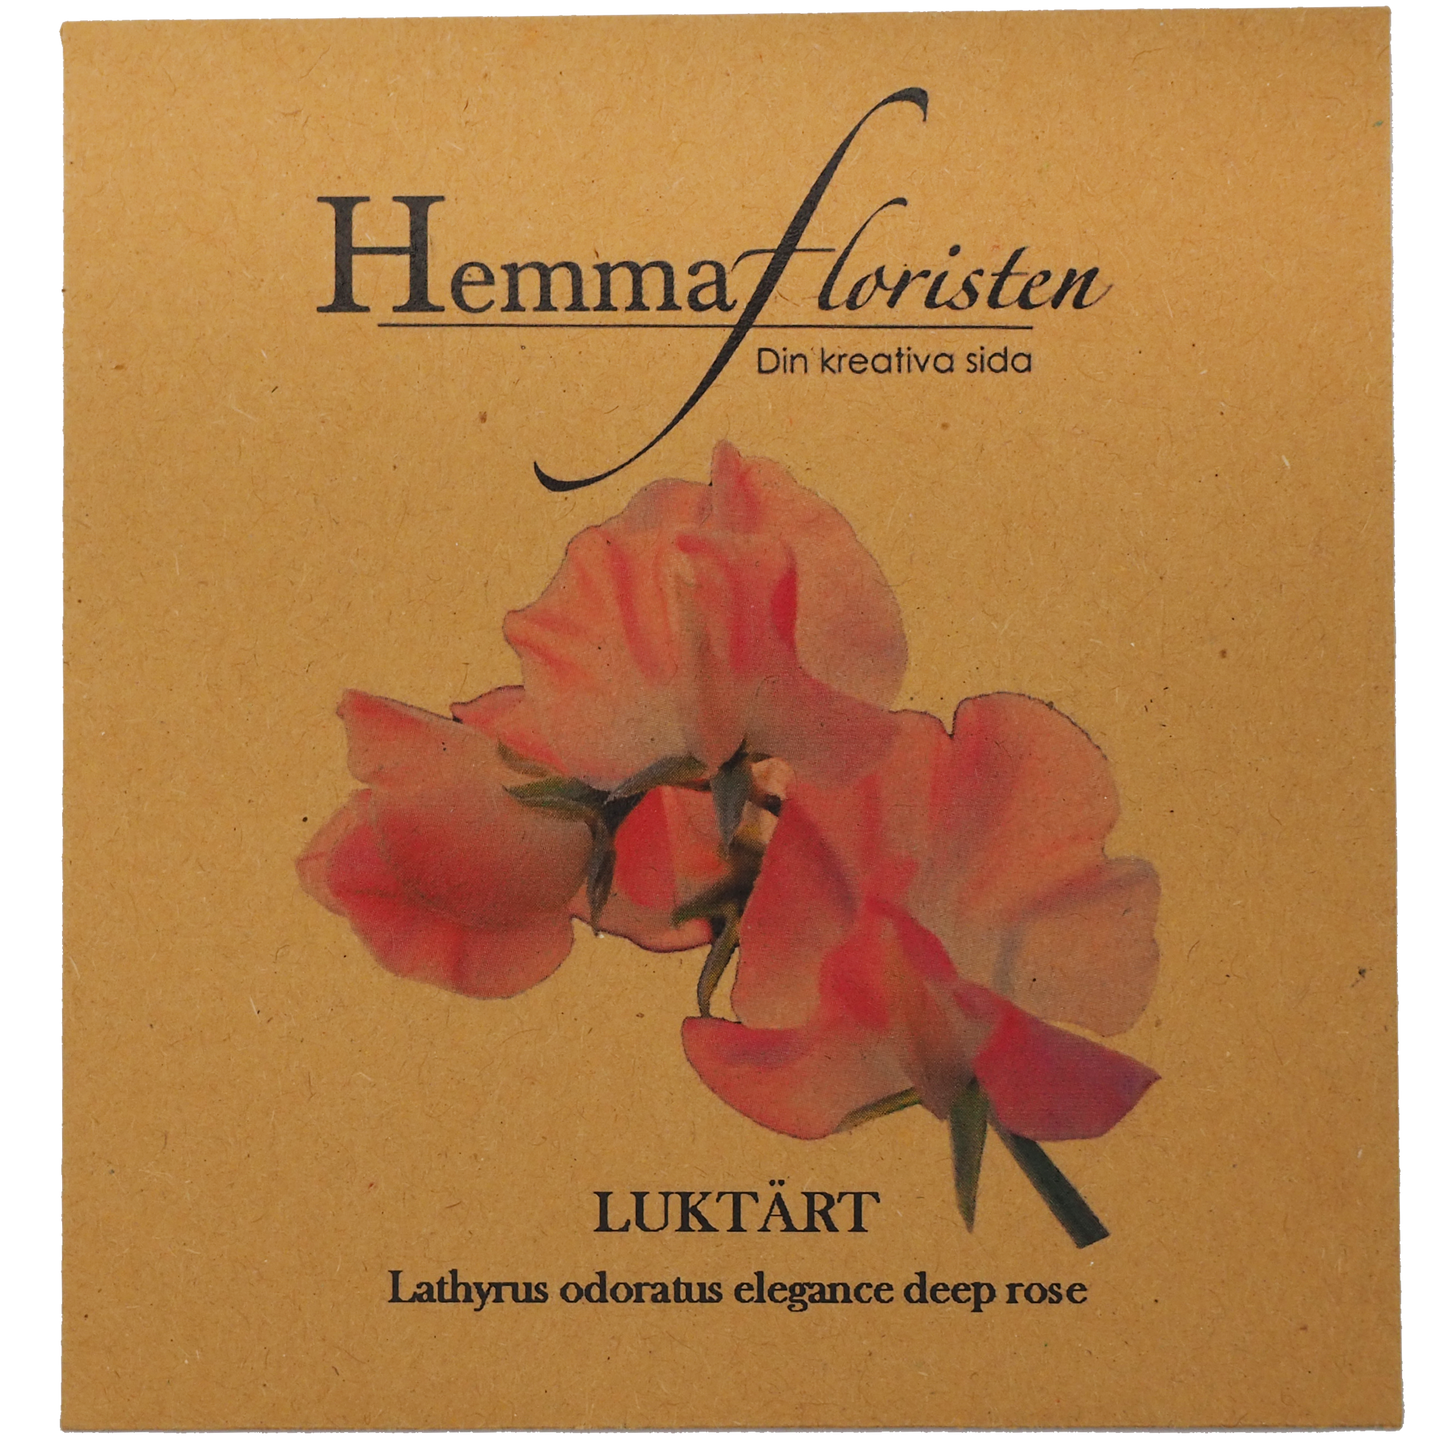 Luktärt - Elegance deep rose